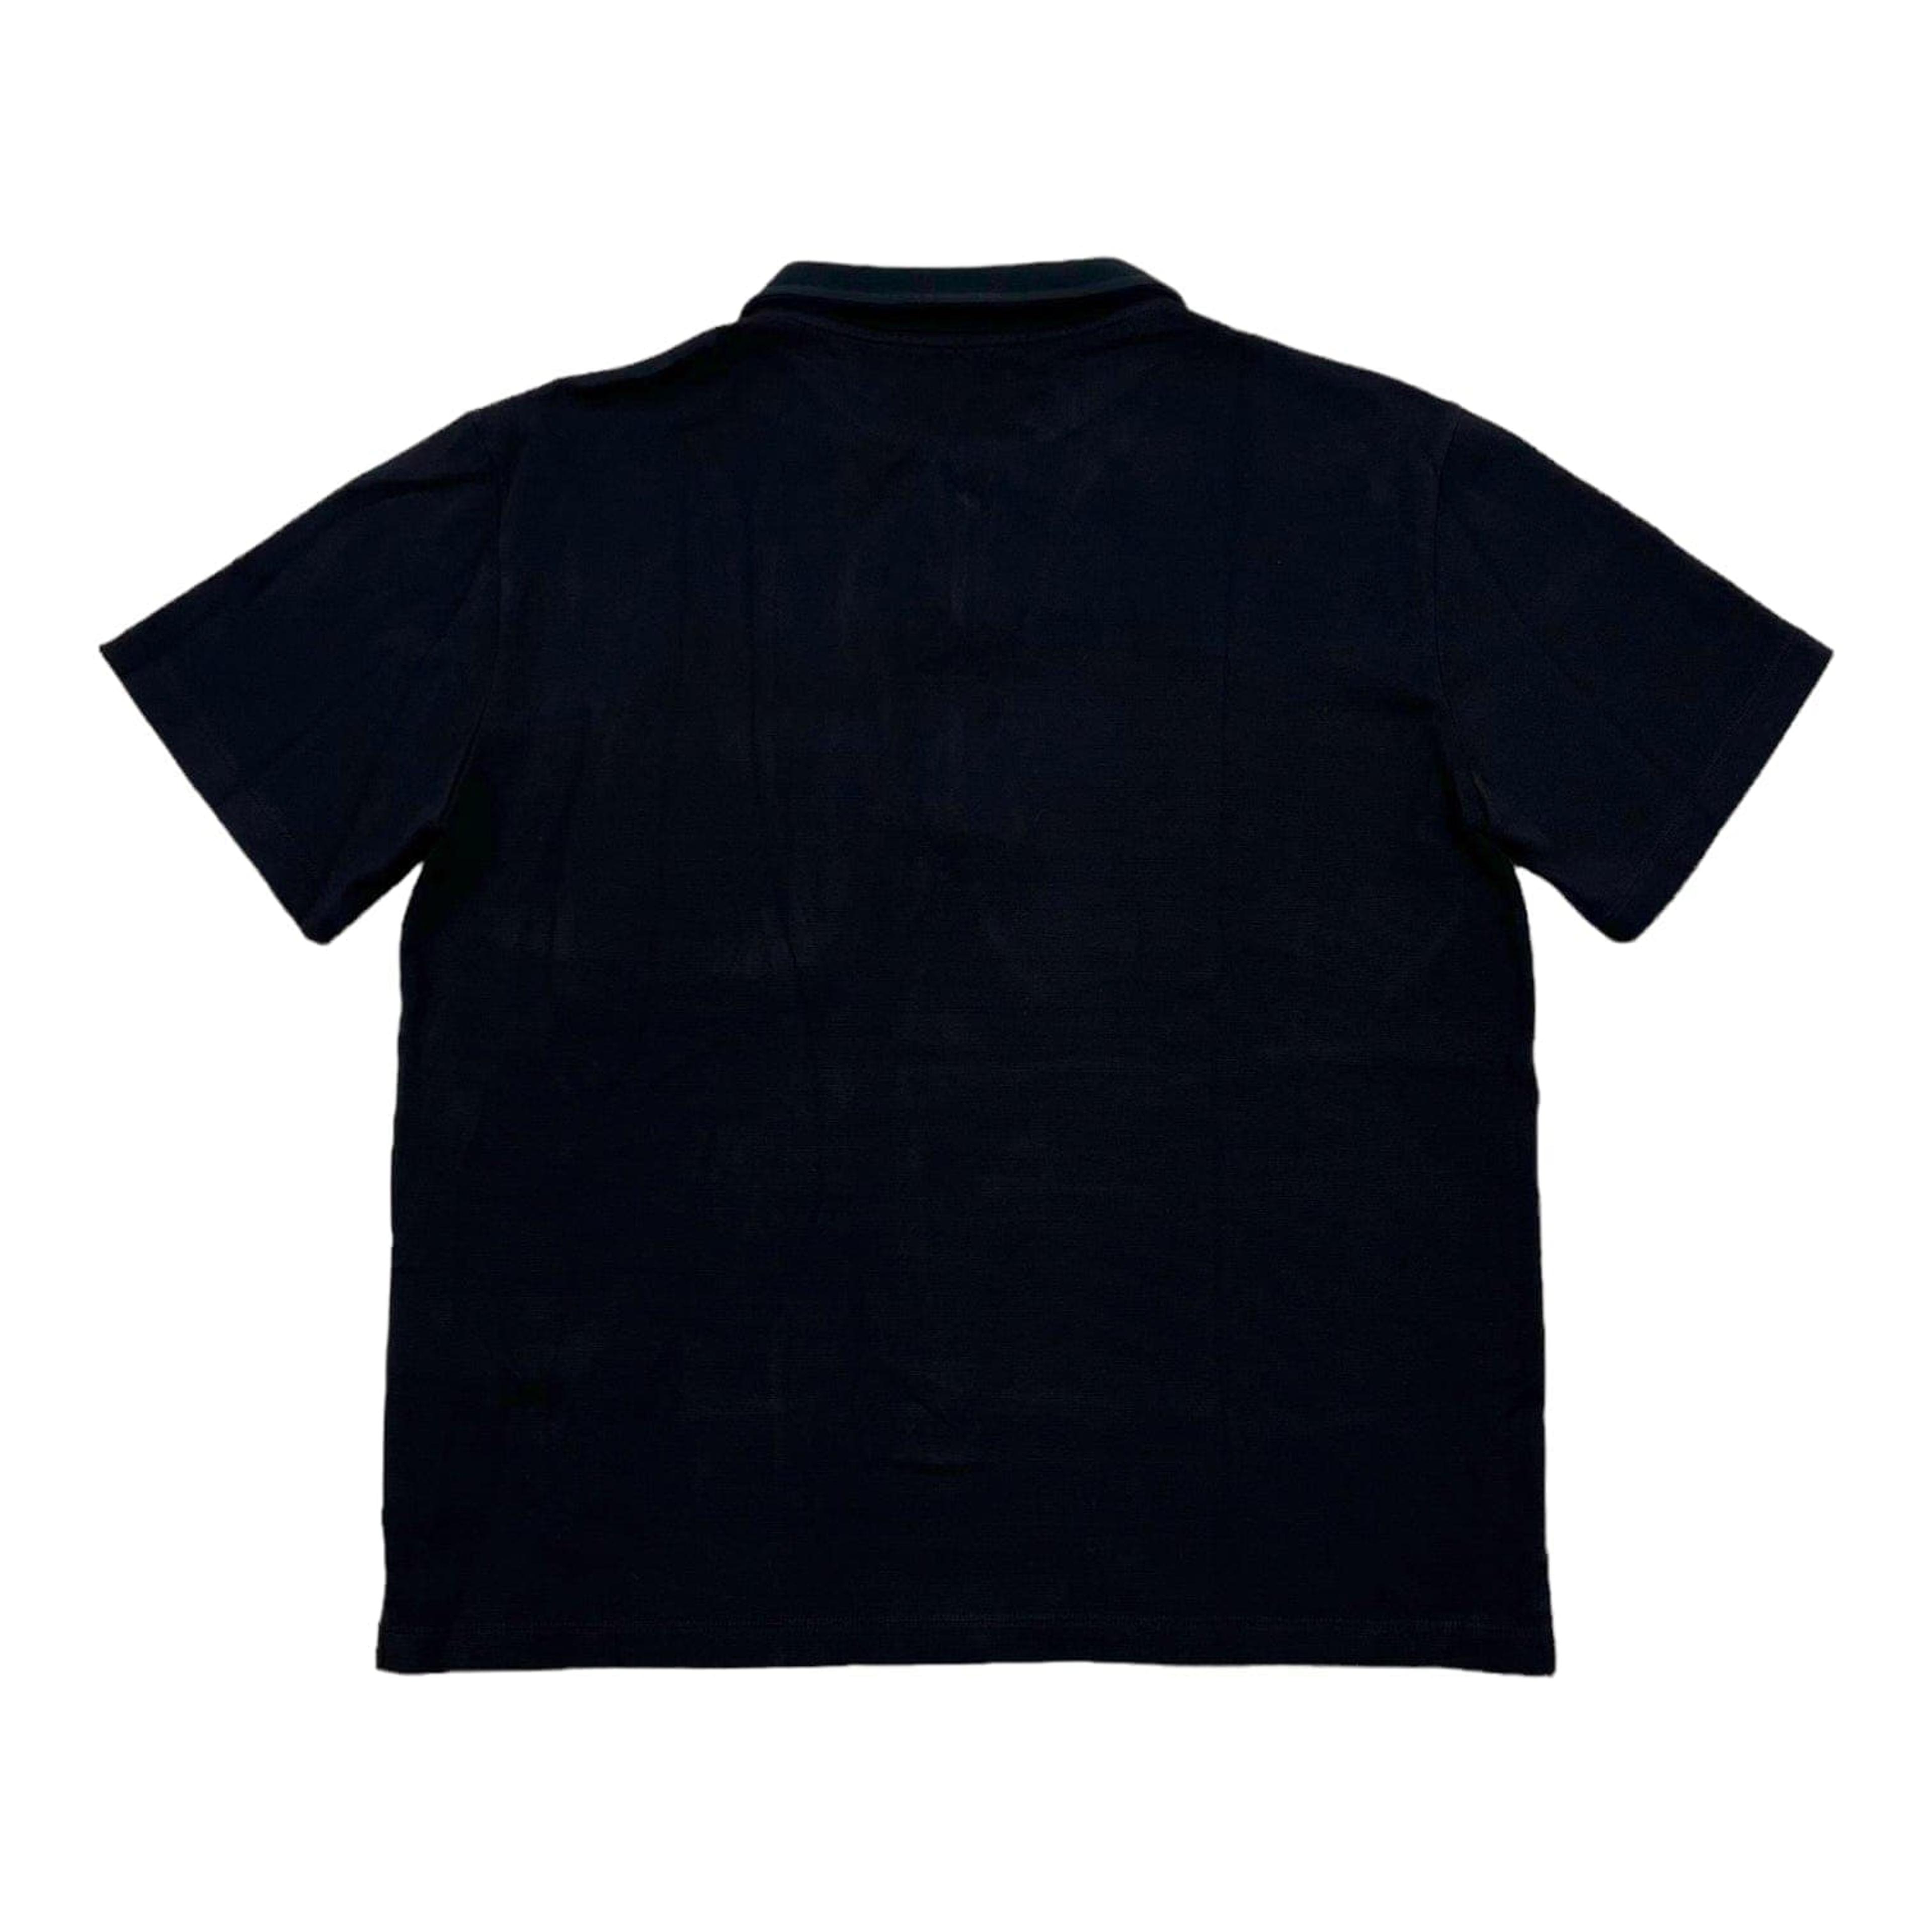 Alternate View 1 of Louis Vuitton Zip Polo Monogram Pocket Short Sleeve Tee Shirt Bl